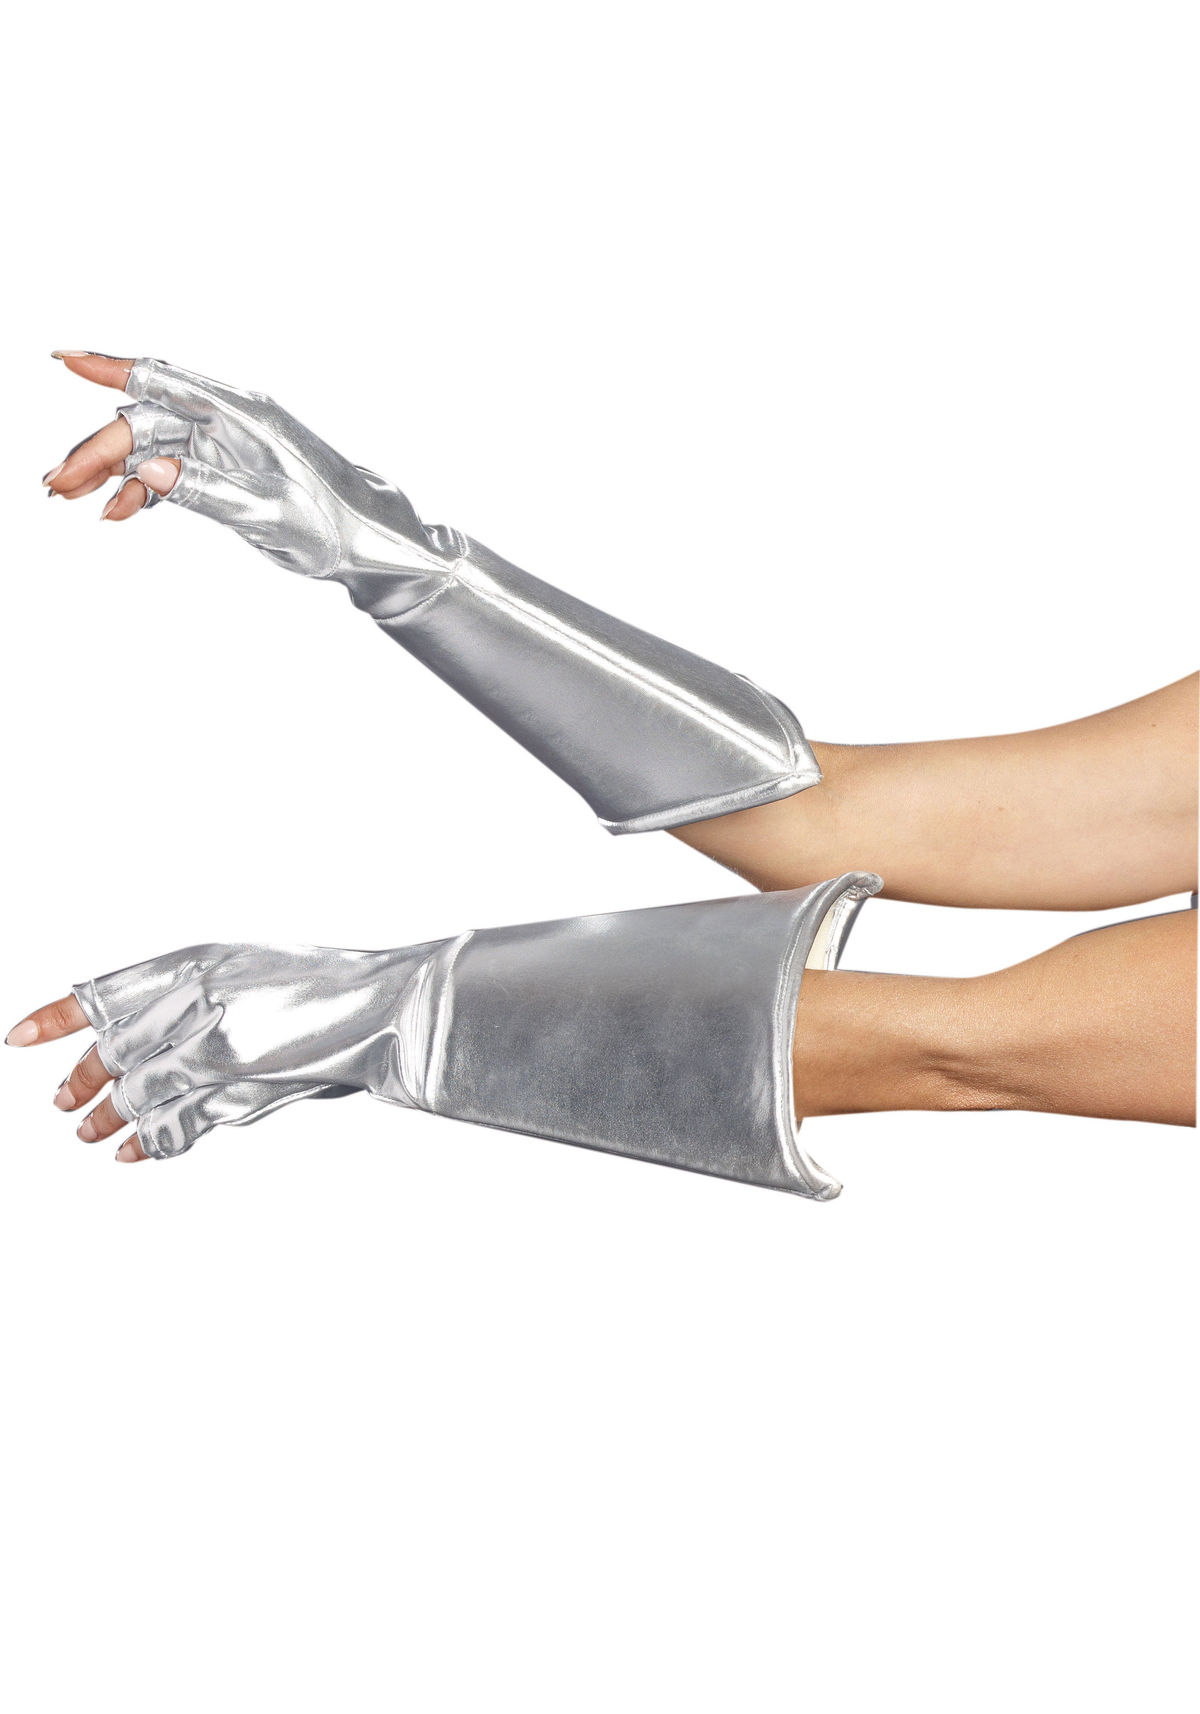 Dreamgirl Silver Fingerless Galaxy Gloves Accessory